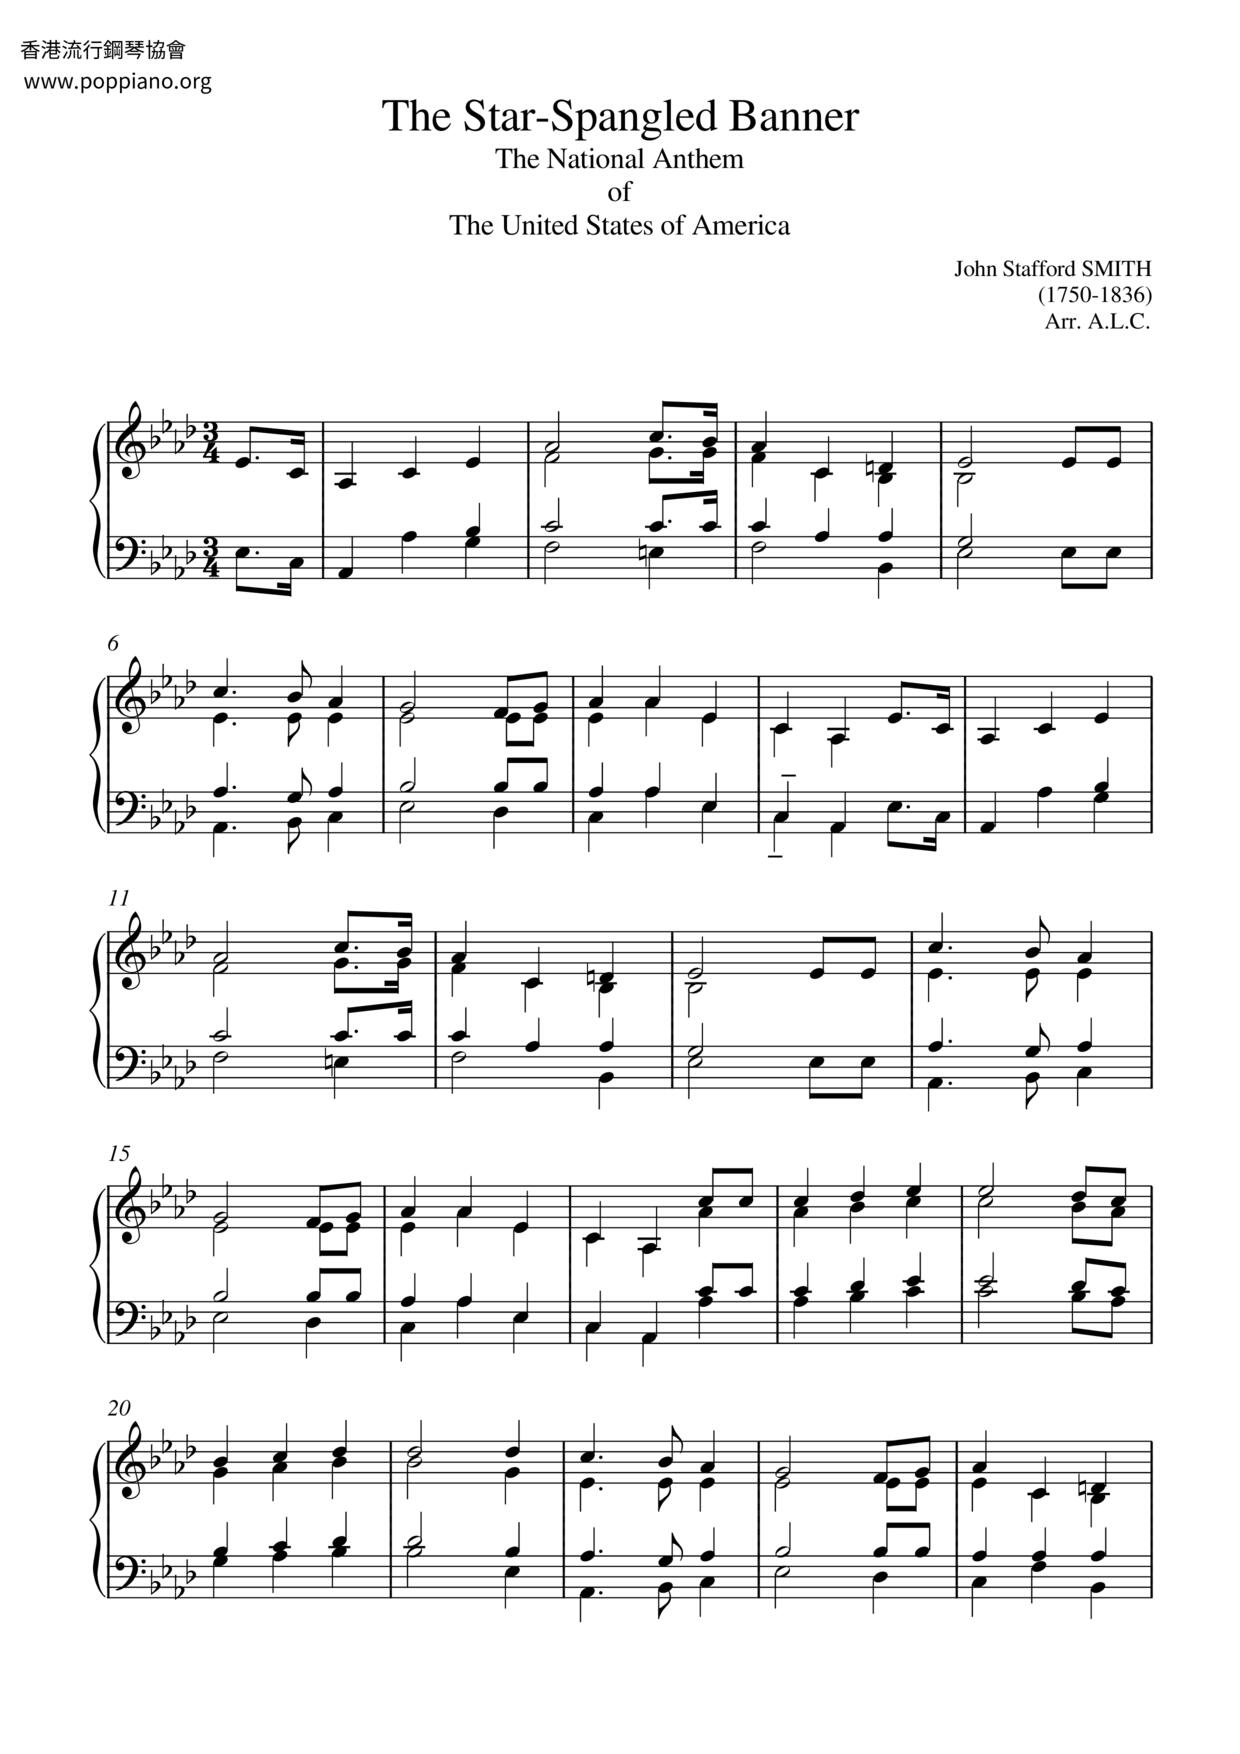 The Star-Spangled Banner (USA Anthem) Score